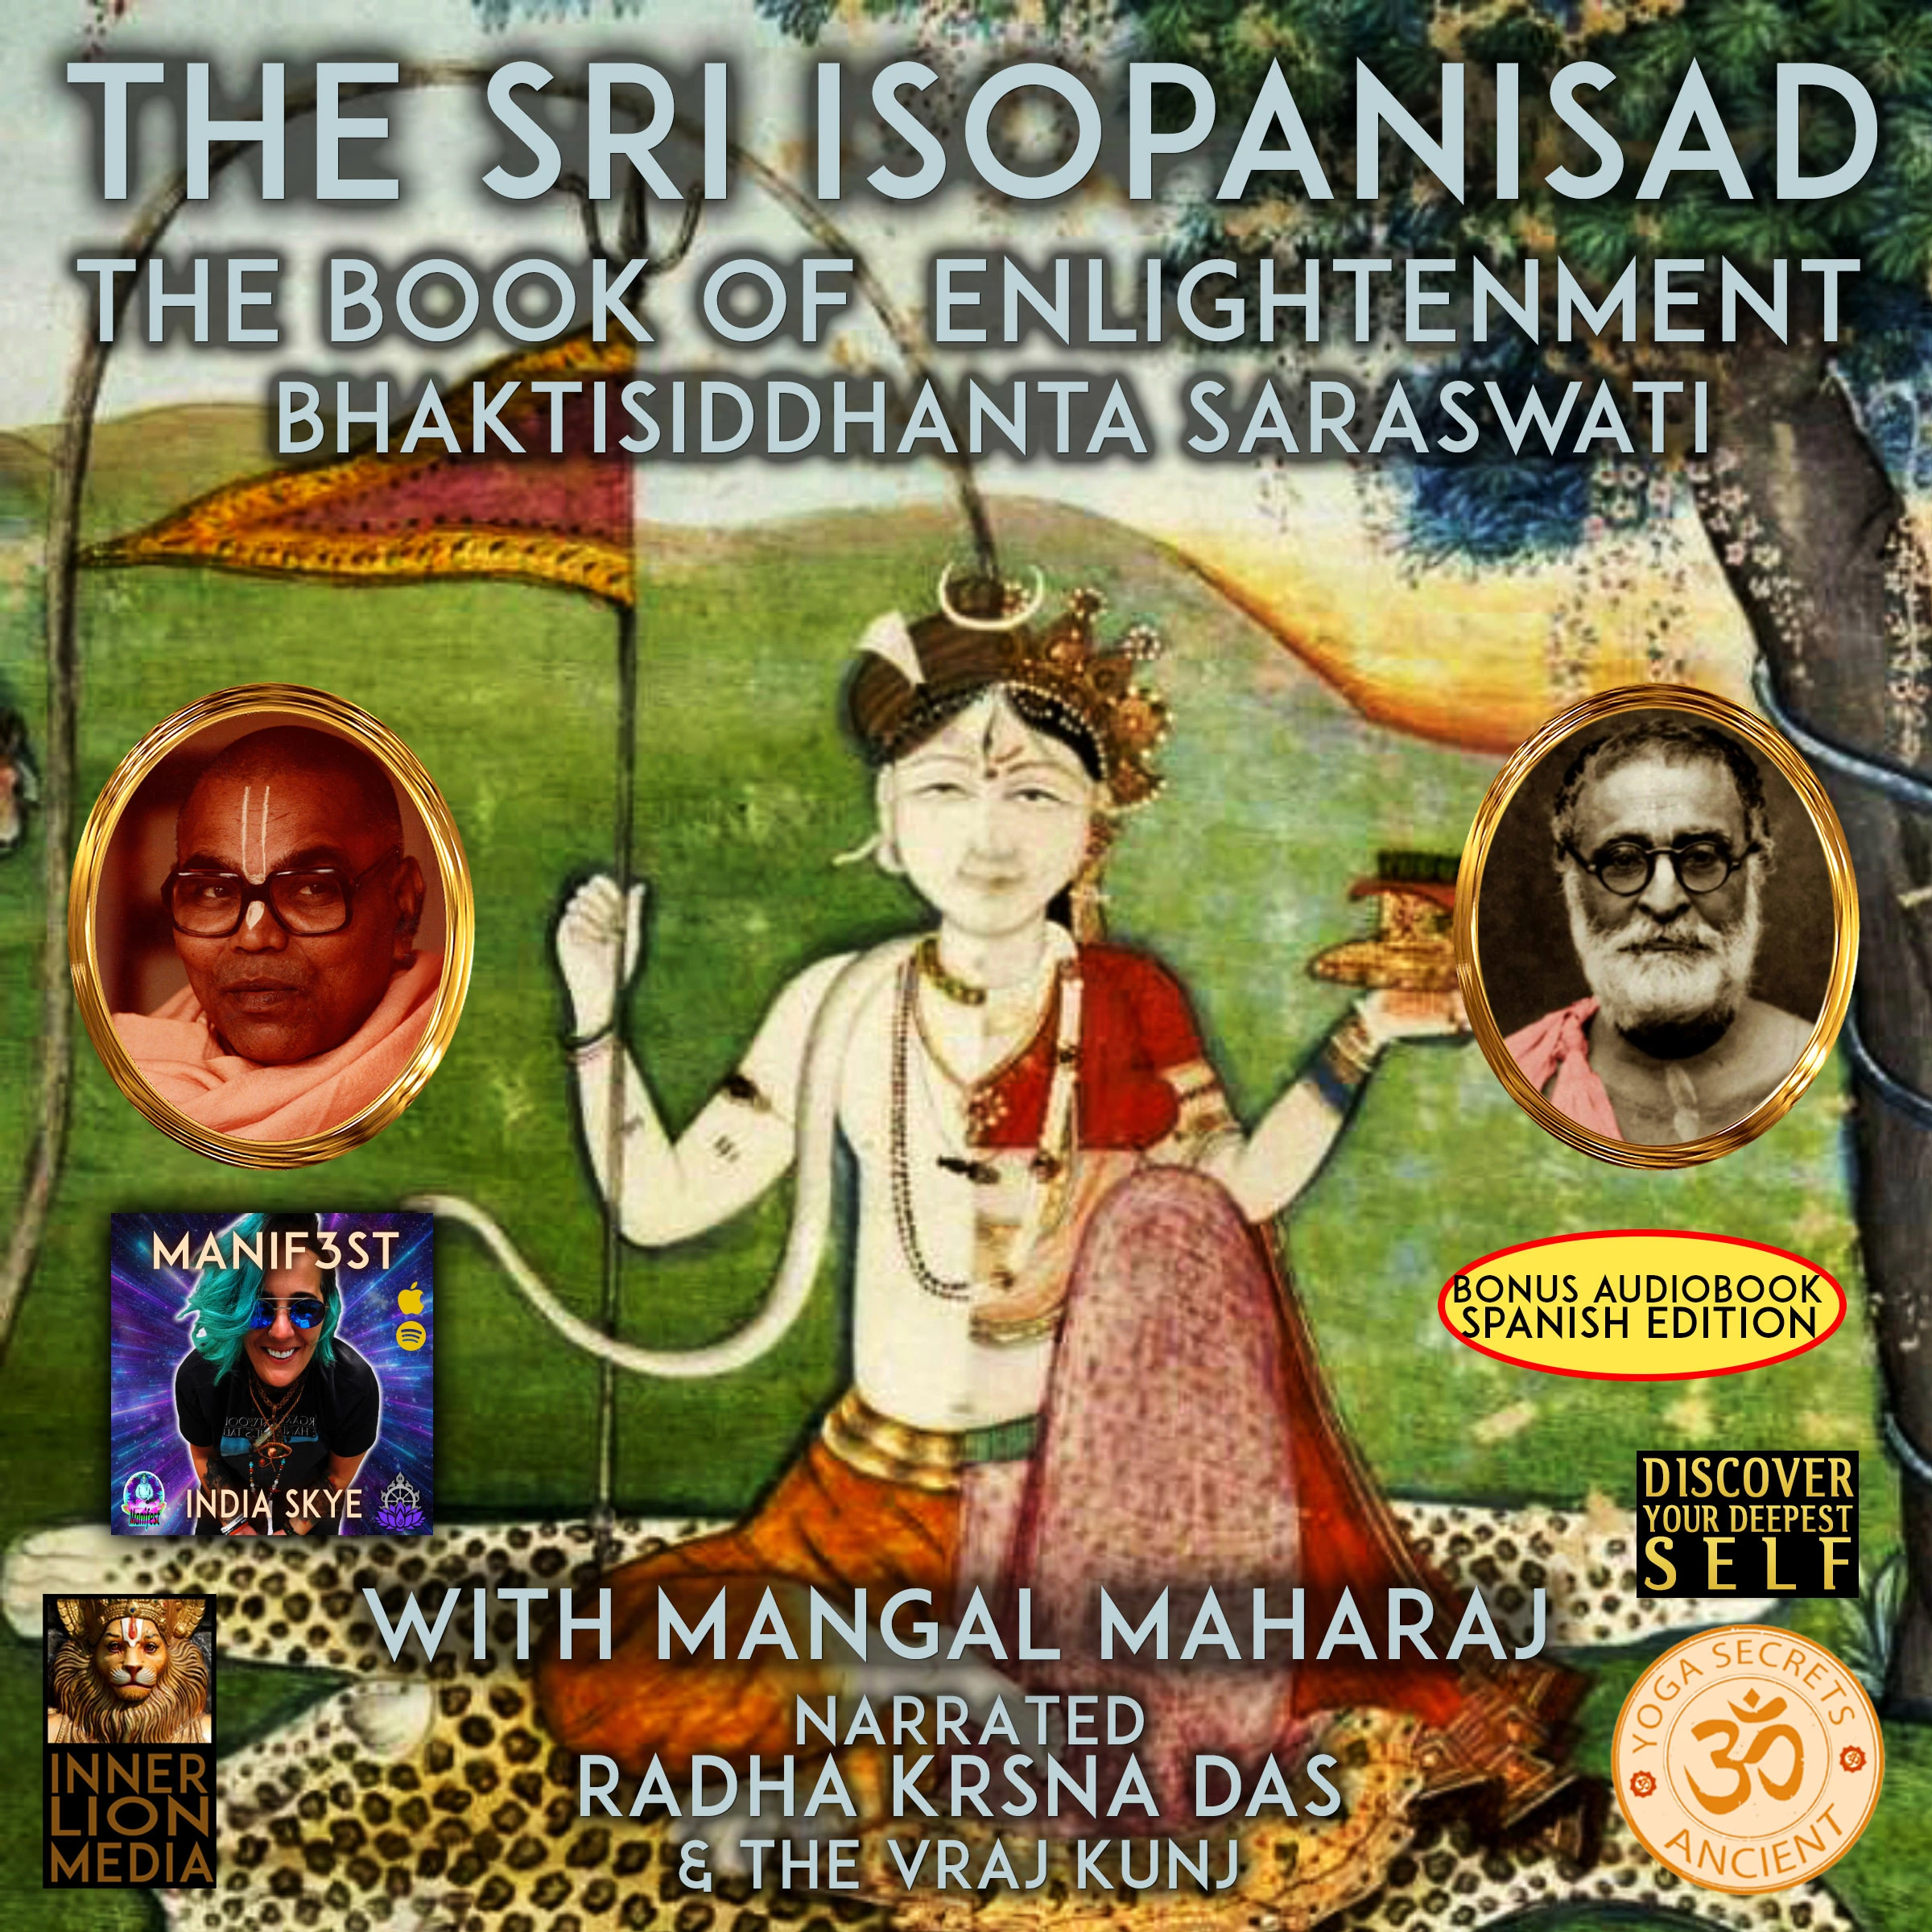 The Sri Isopanisad Audiobook by Mangal Maharaj